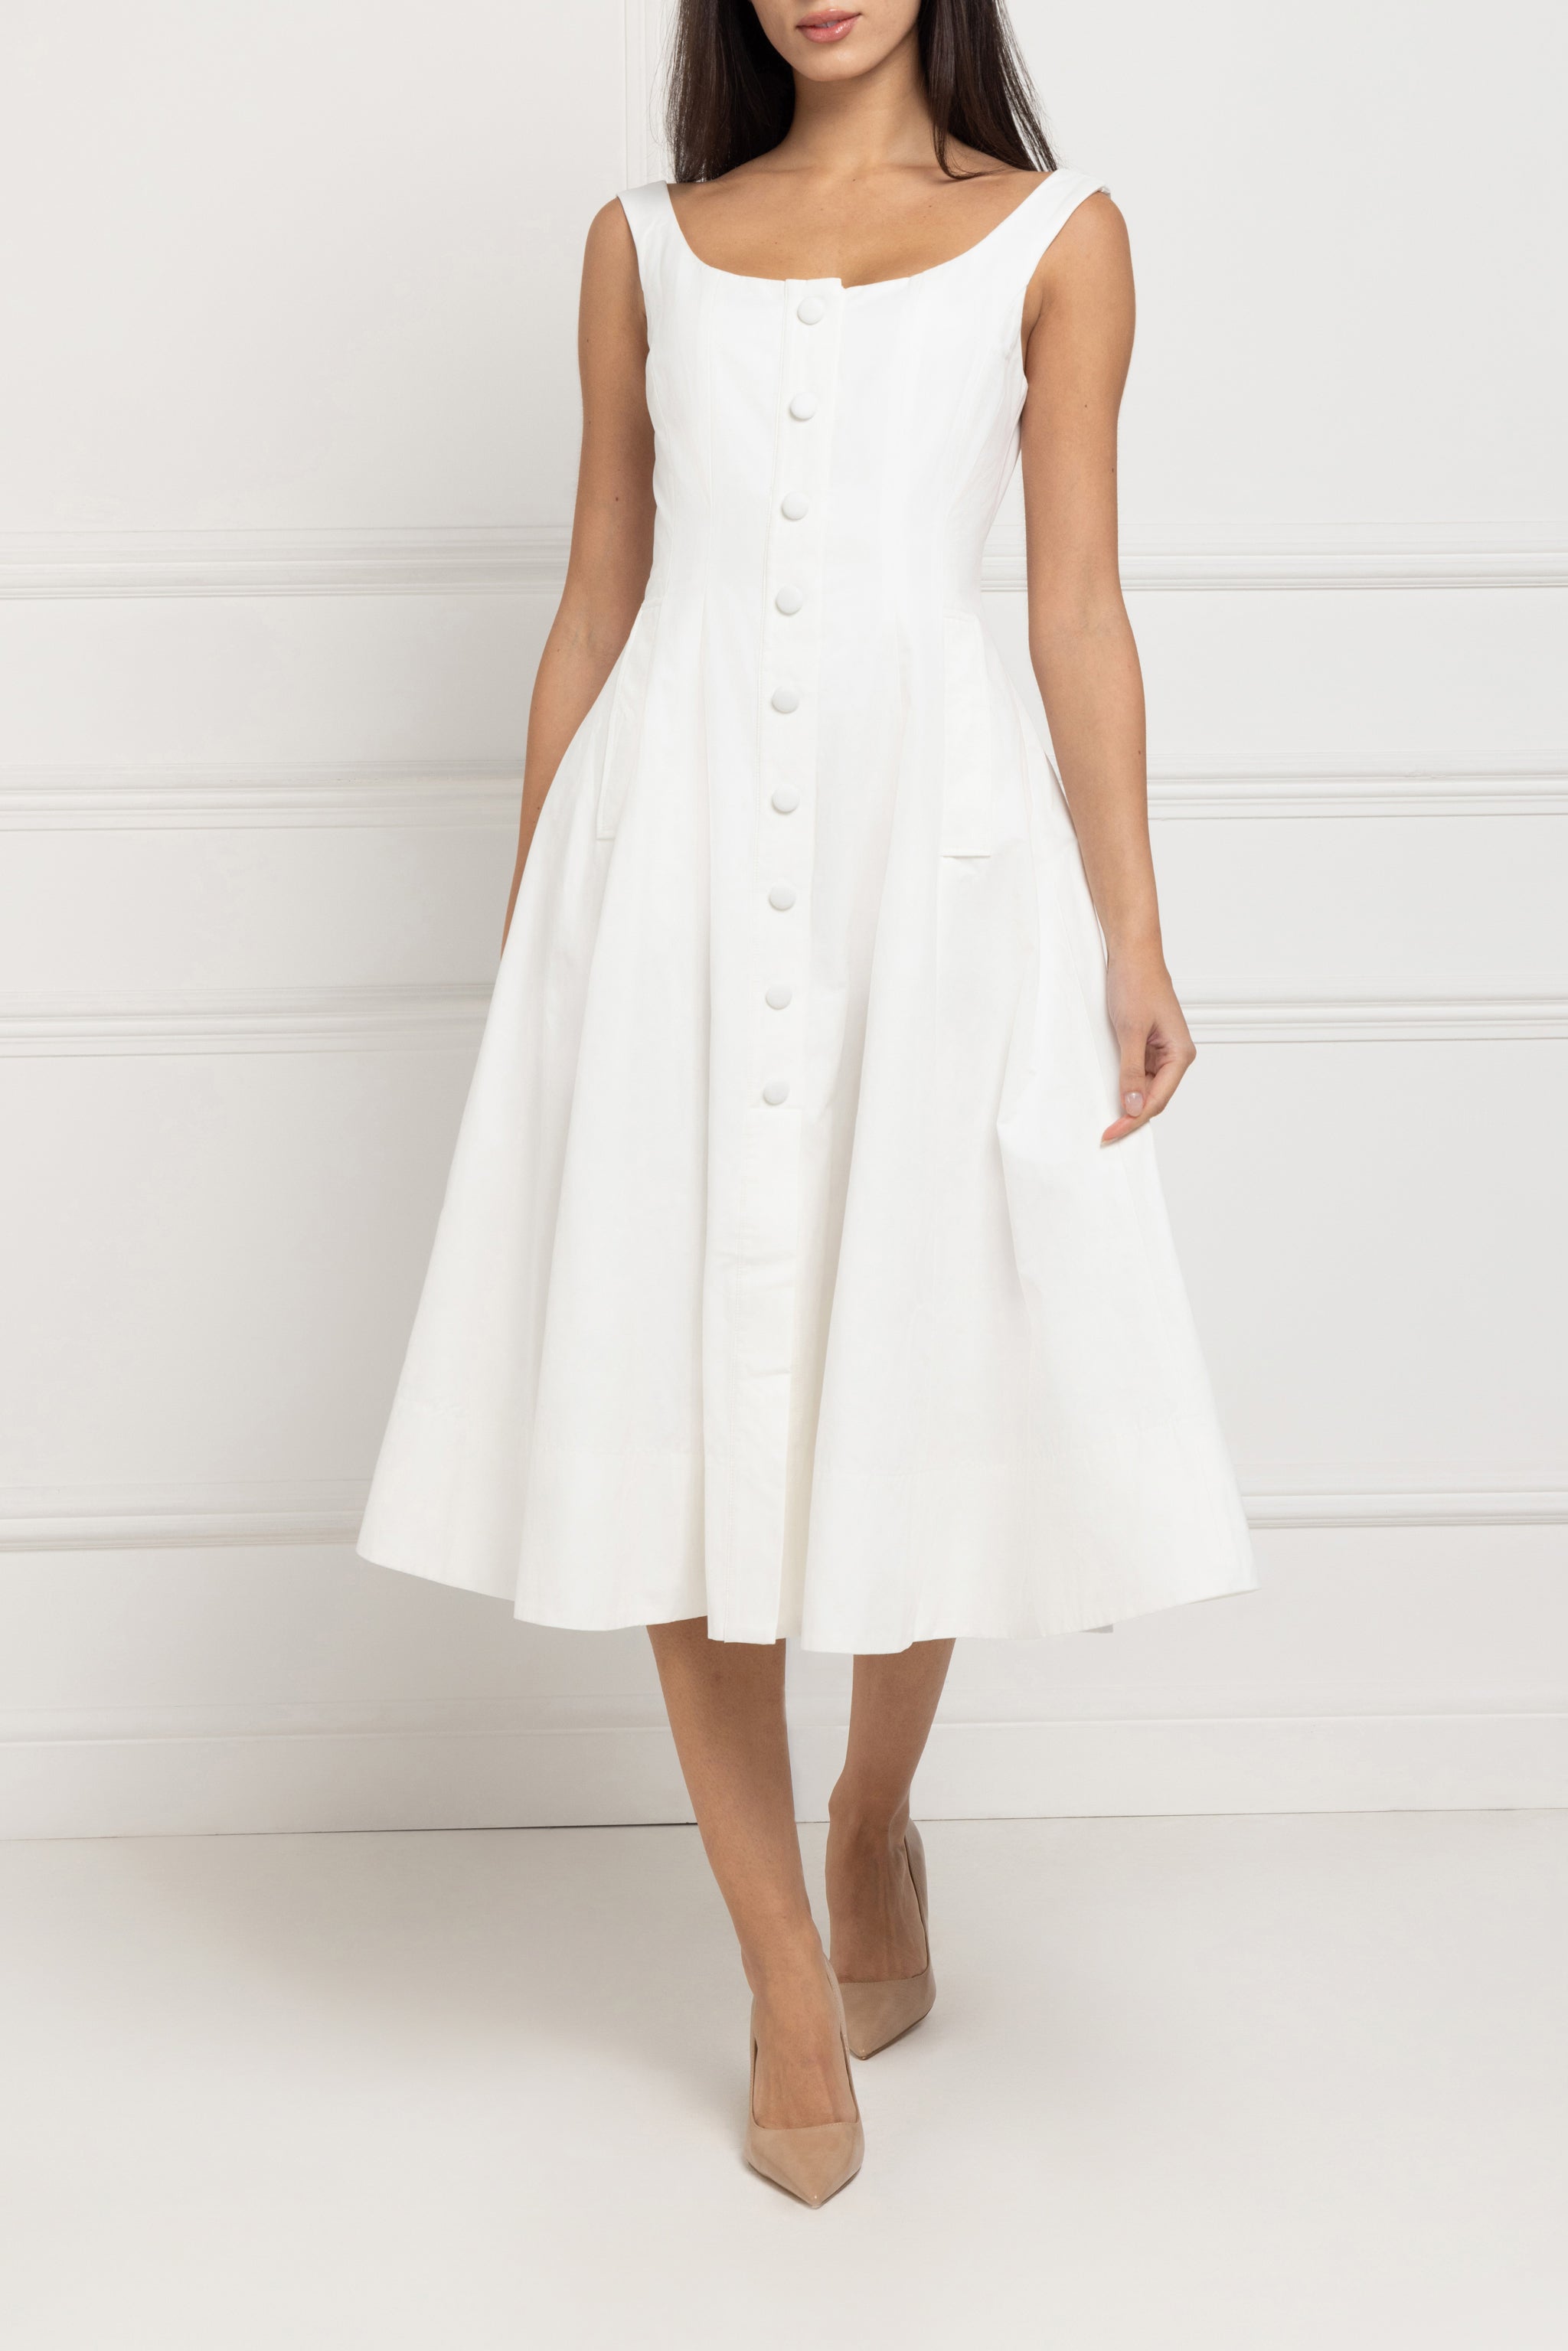 Boat Neck Dress (White)